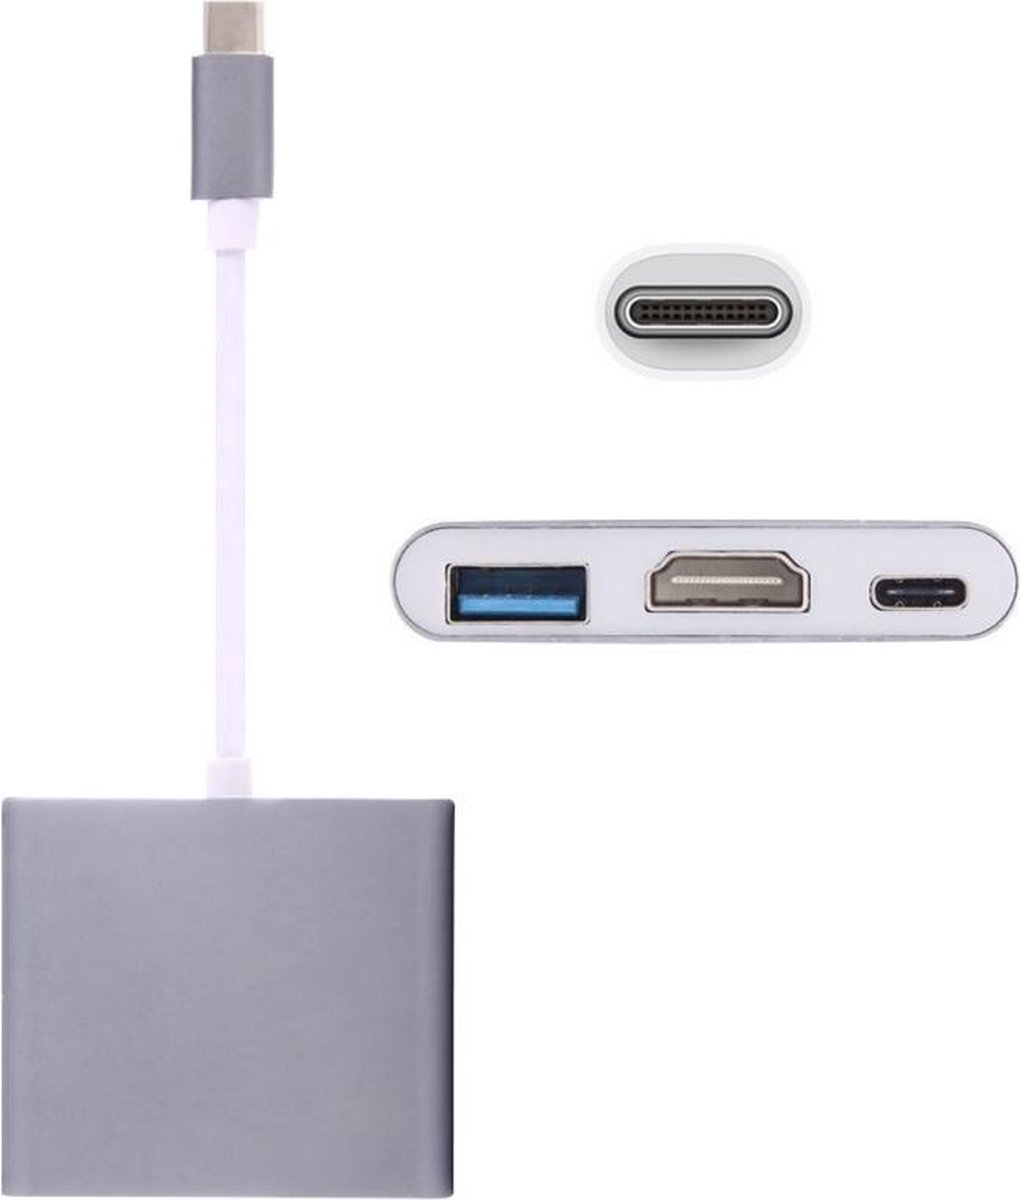 USB 3.1 Type-C Male to USB 3.1 Type-C Female & HDMI Female & USB 3.0 Female Adapter voor Macbook 12 / Chromebook Pixel 2015 (grijs)